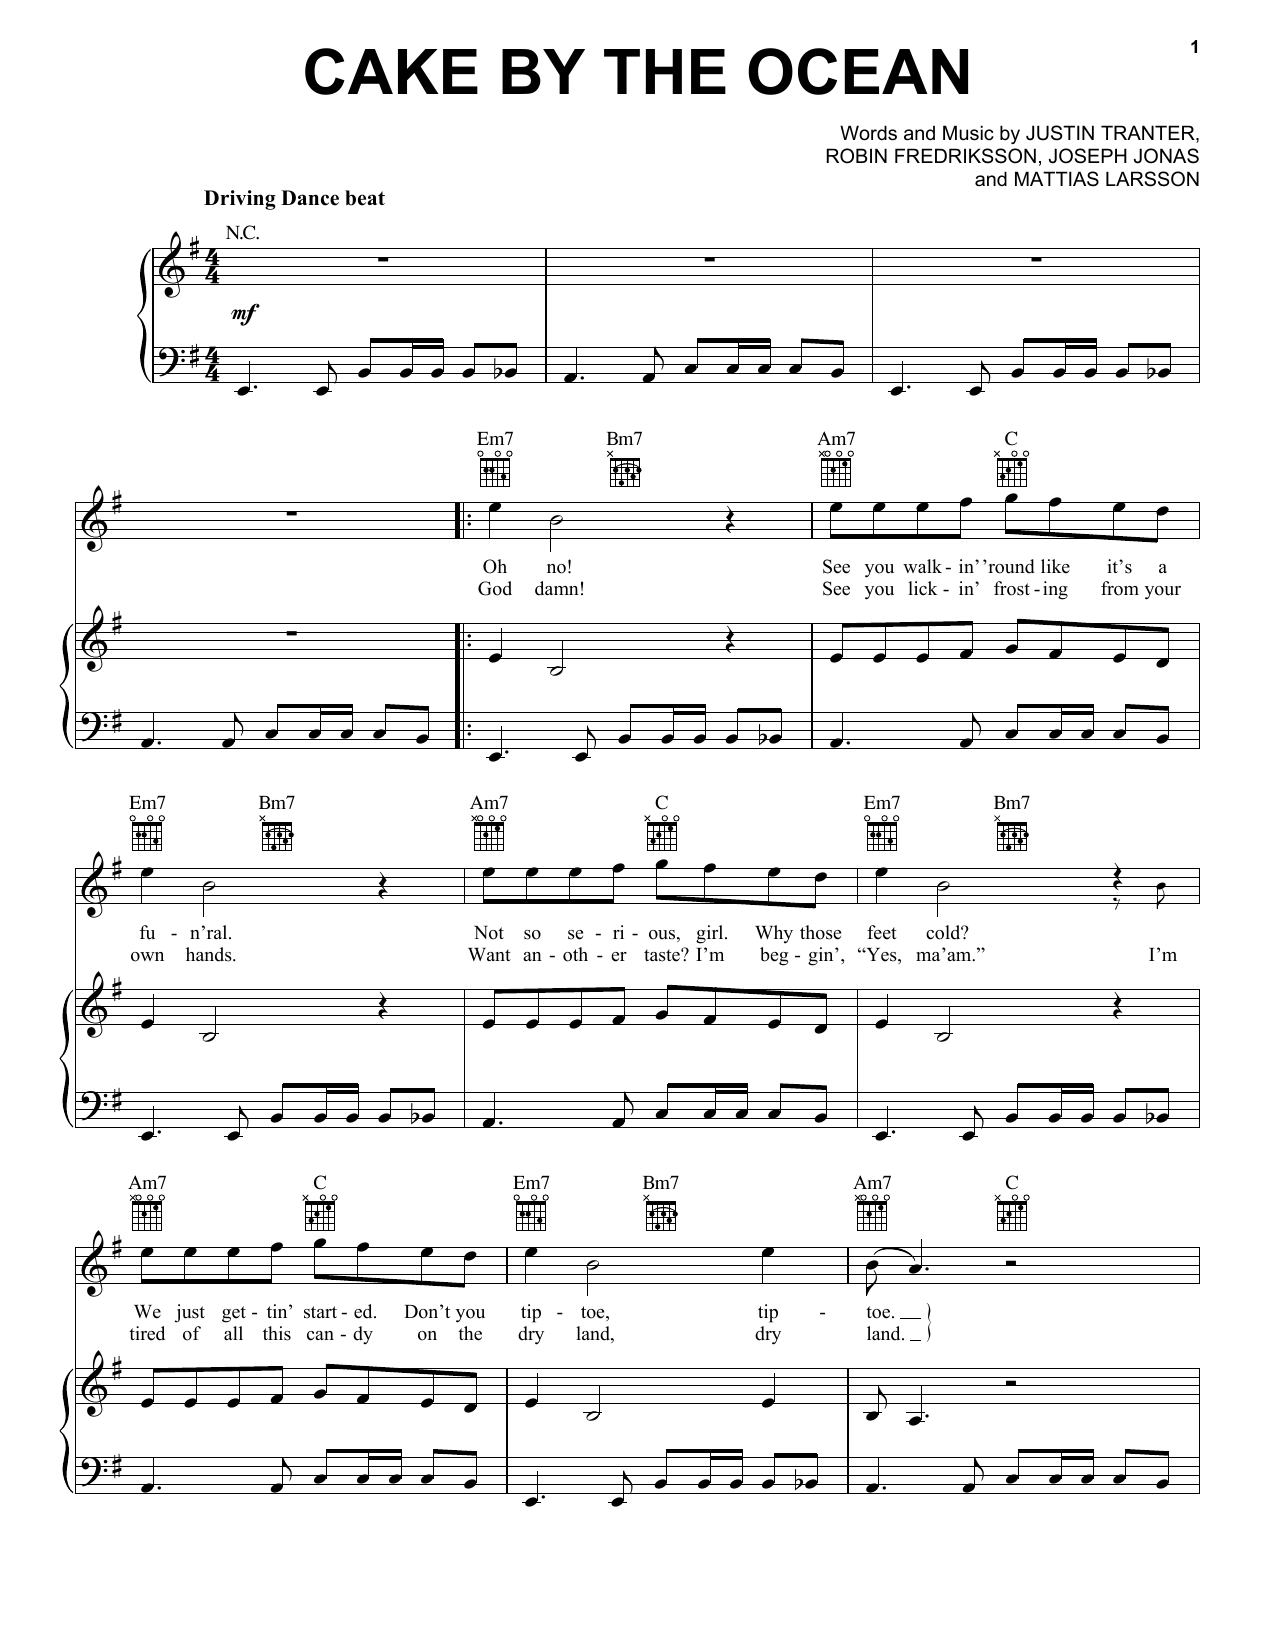 Donau om Eksklusiv DNCE "Cake By The Ocean" Sheet Music PDF Notes, Chords | Pop Score Ukulele  Download Printable. SKU: 173867